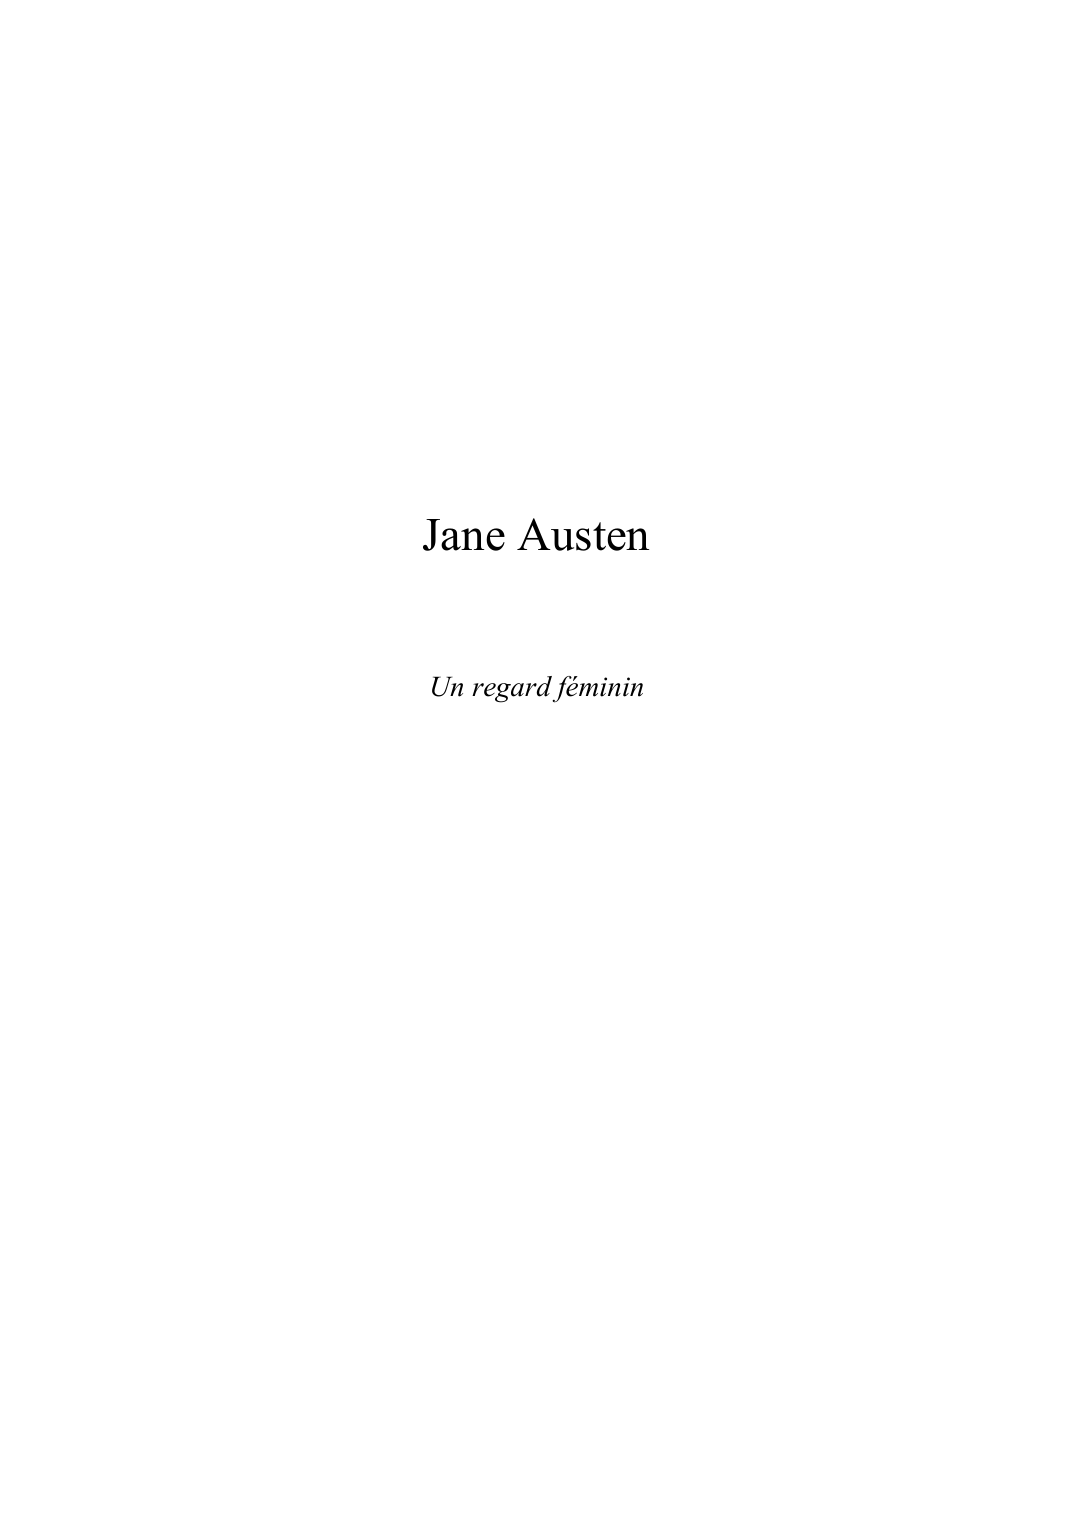 Prévisualisation du document Jane Austen